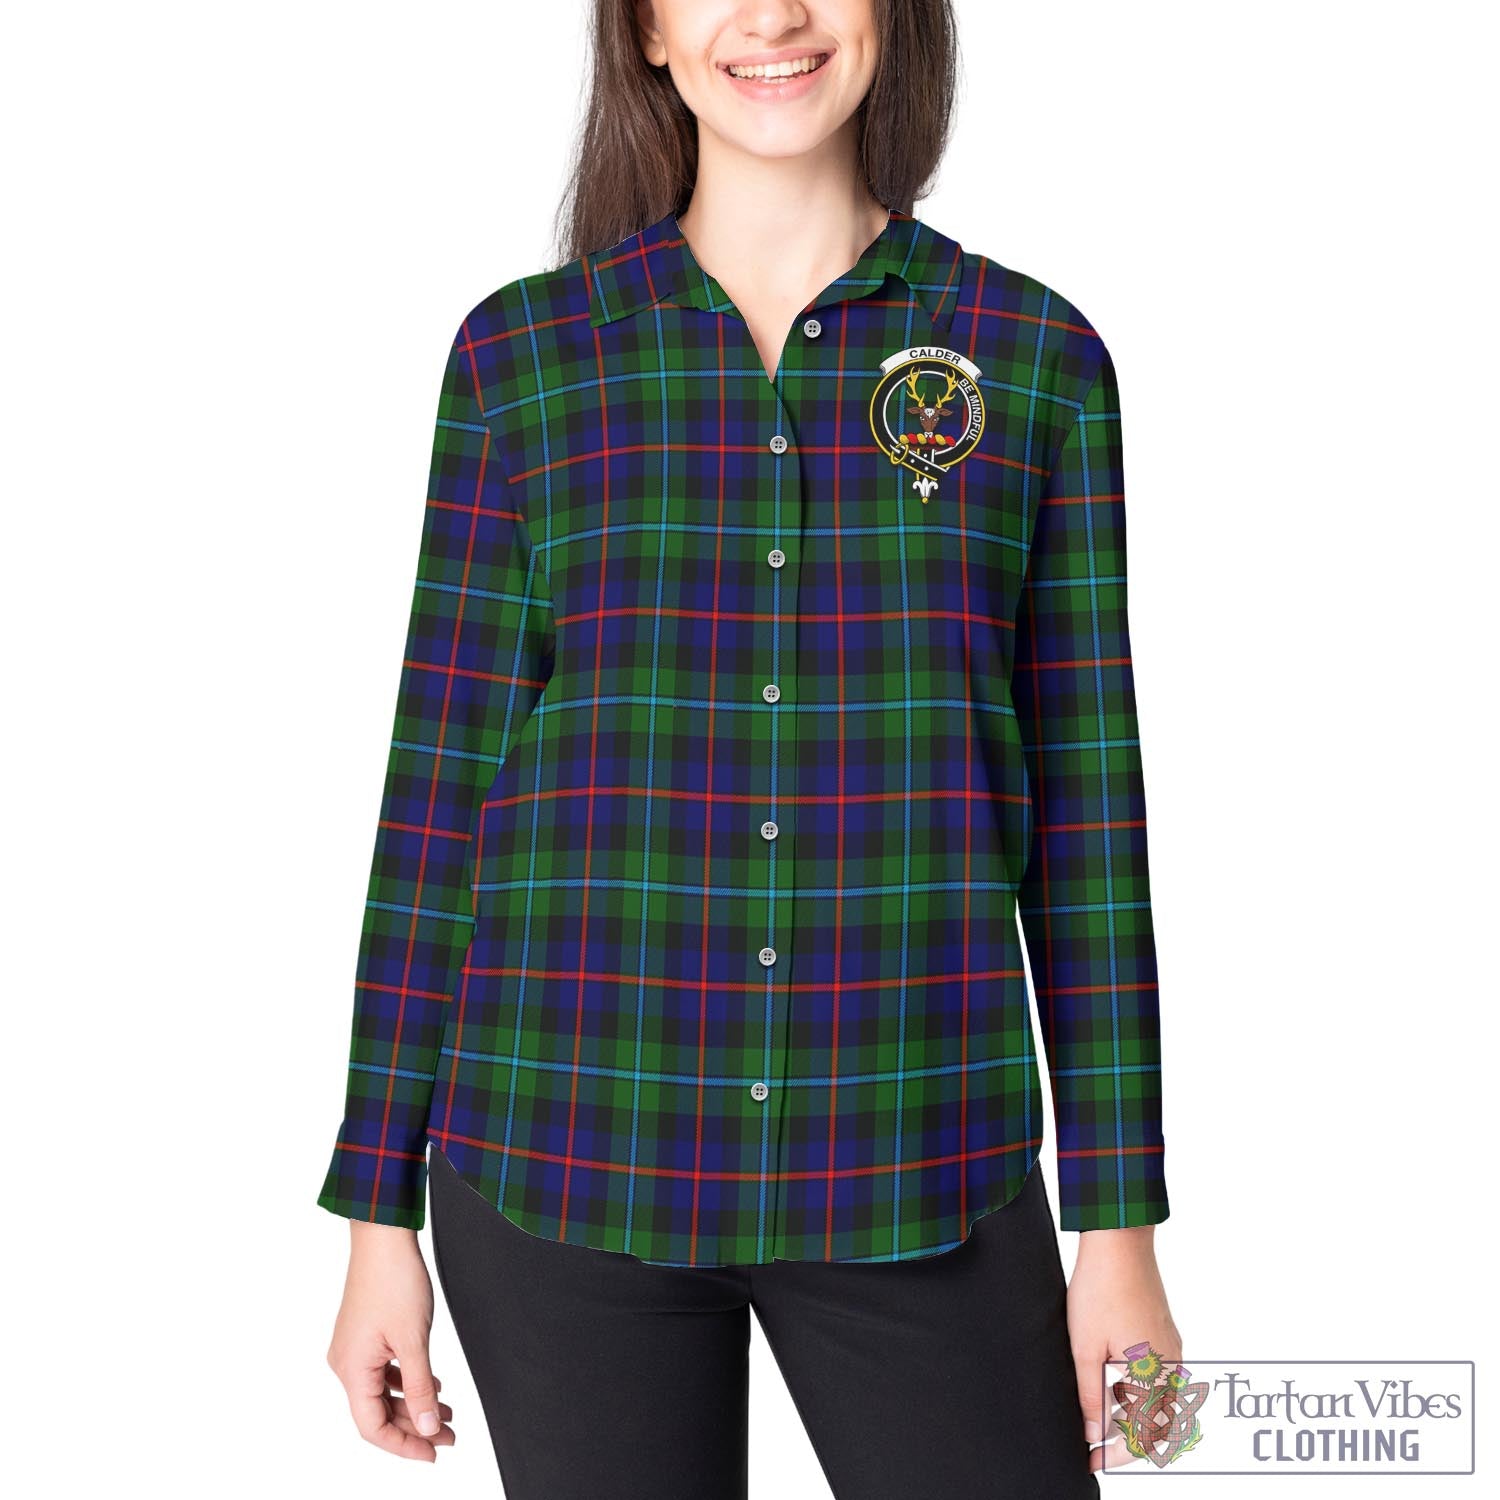 Tartan Vibes Clothing Calder Modern Tartan Womens Casual Shirt with Family Crest